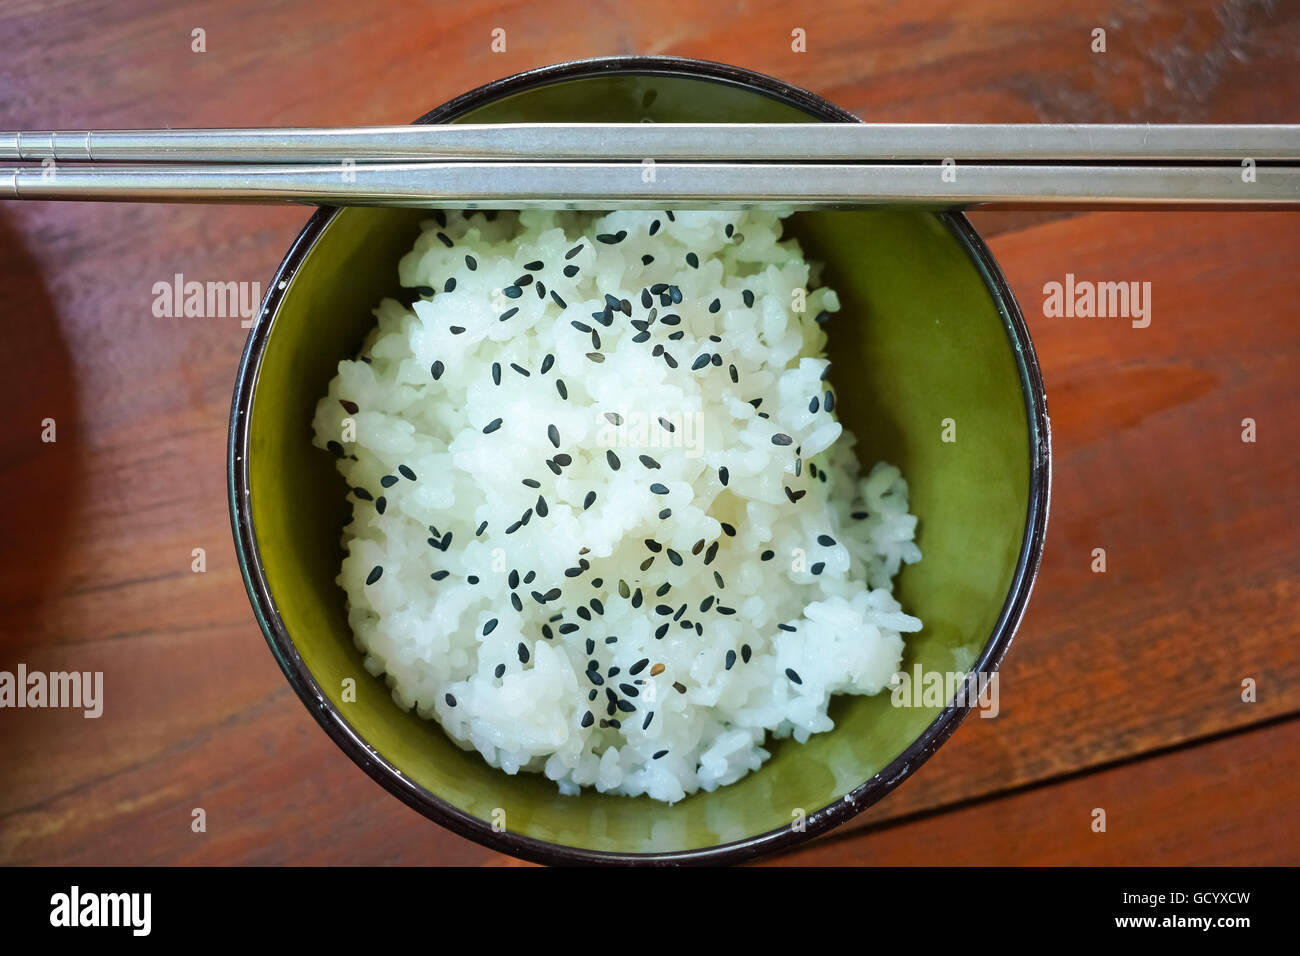 White Jasmine Rice in Asian Bowl with Black Sesame Seeds - Stock Image Stock Photo